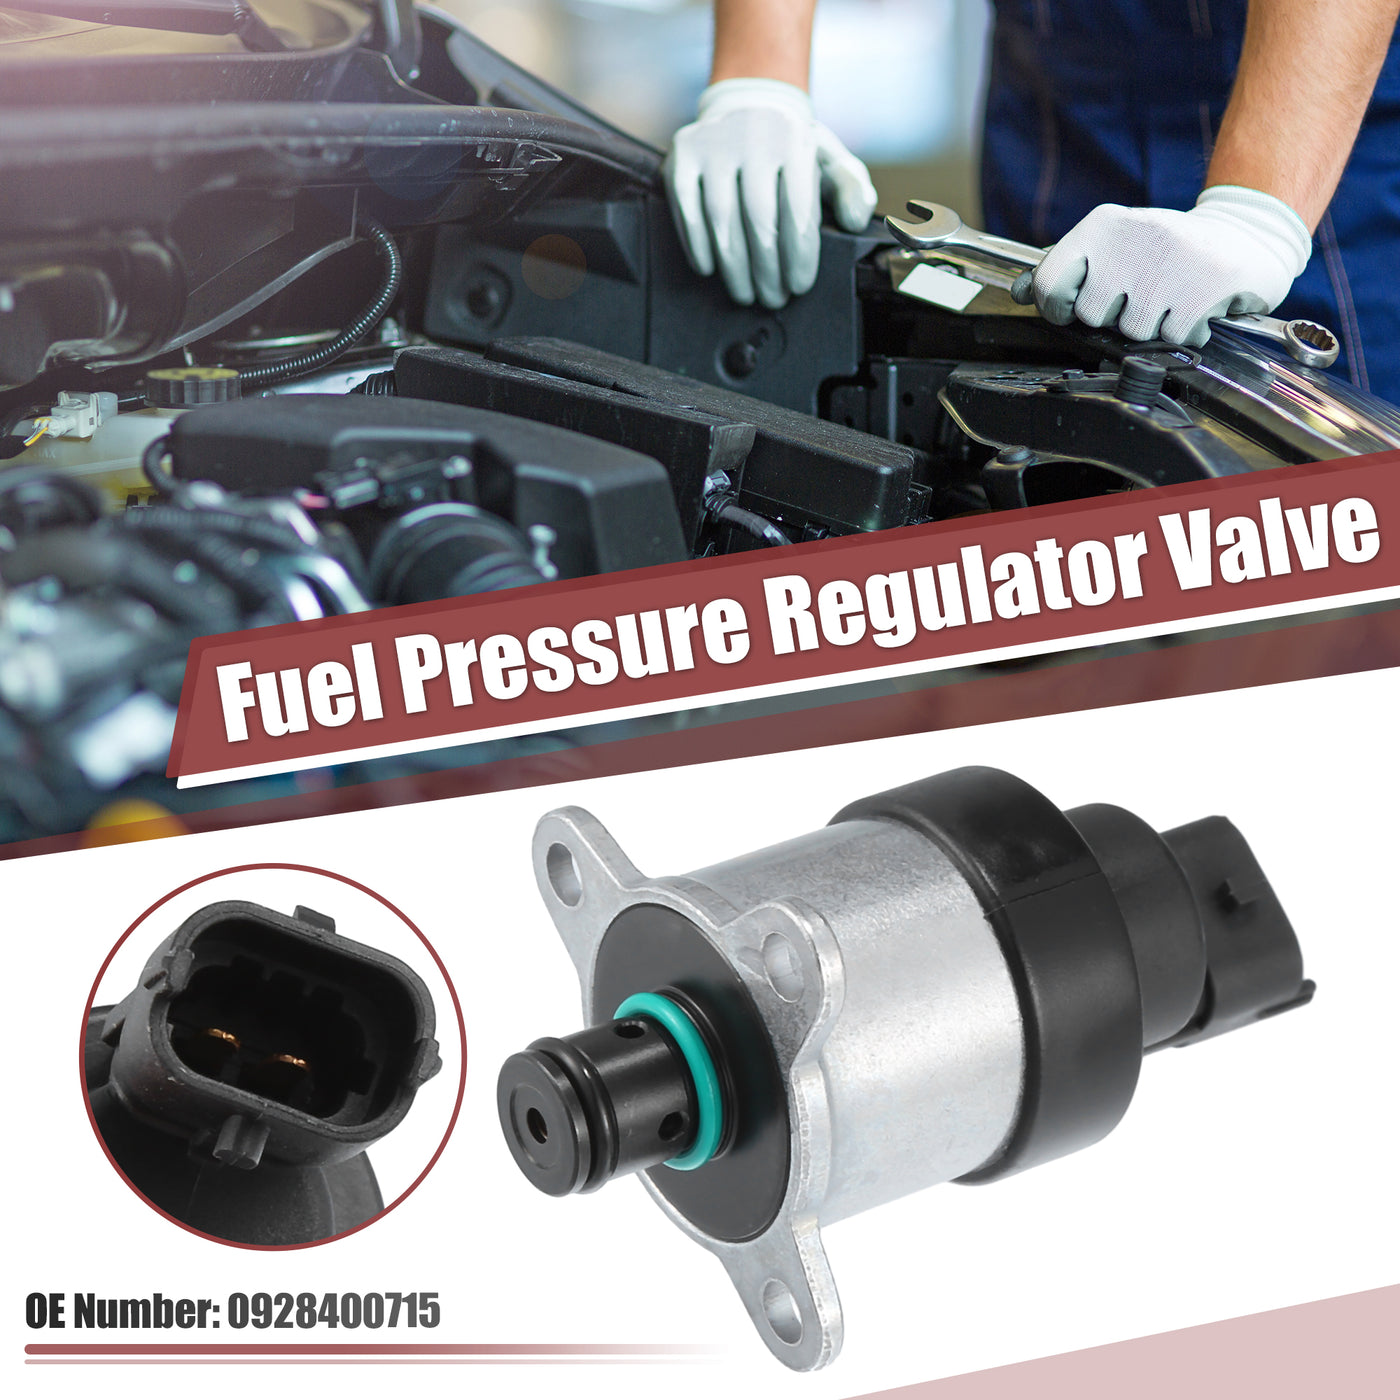 ACROPIX Fuel Pressure Regulator Valve Fuel Control Actuator Fit for Mazda BT-50 2006-2007 No.0928400715 - Pack of 1